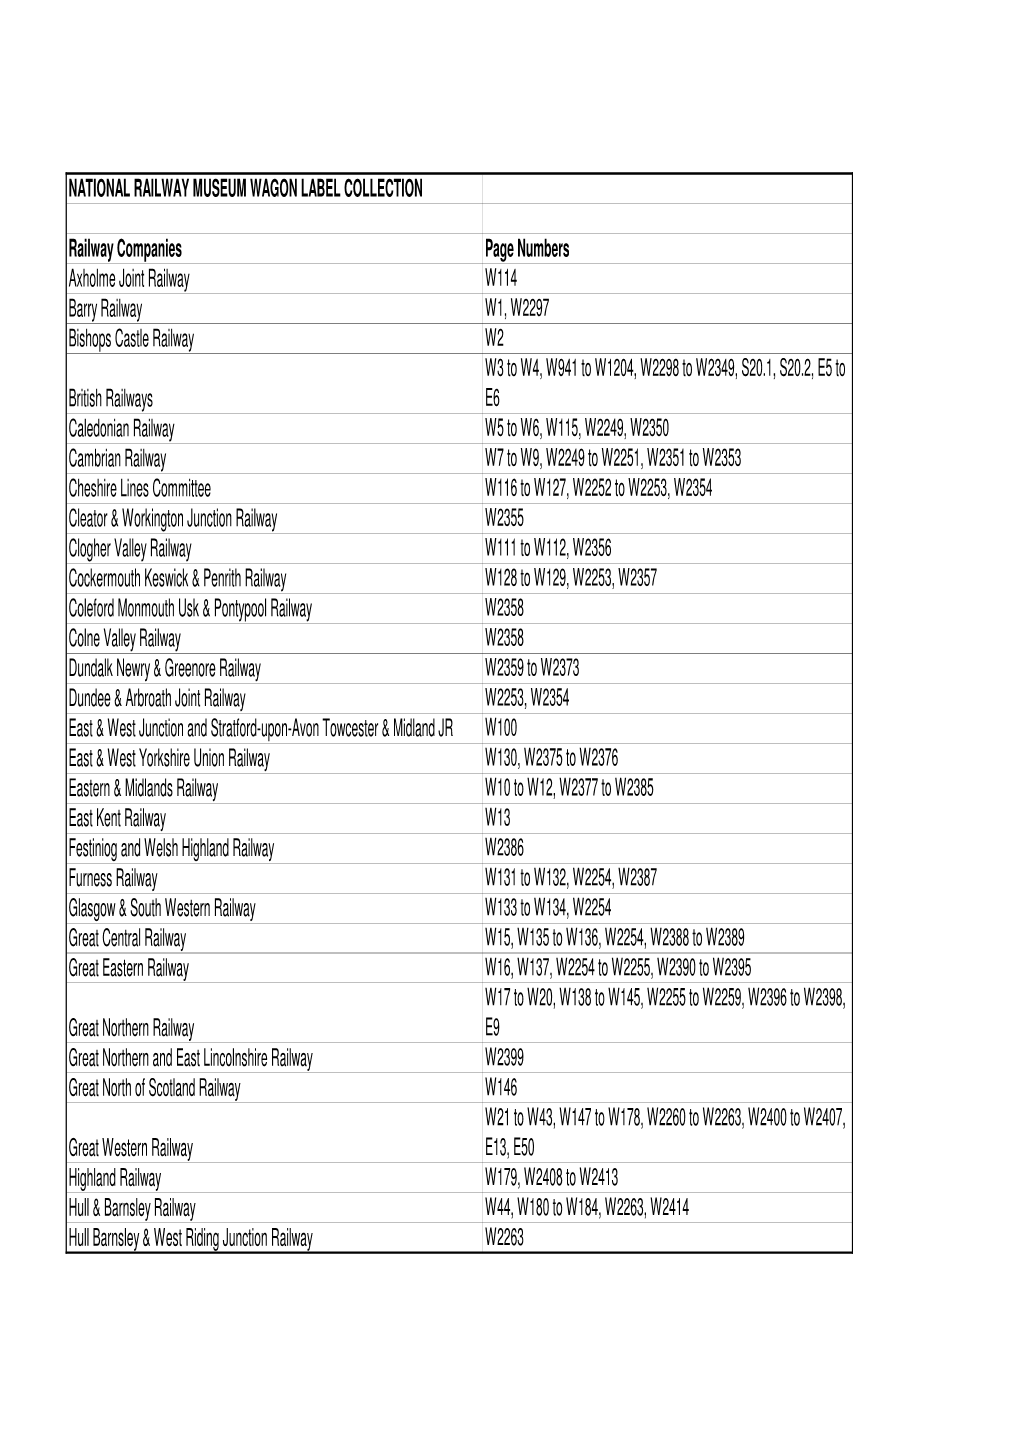 Wagon Labels List